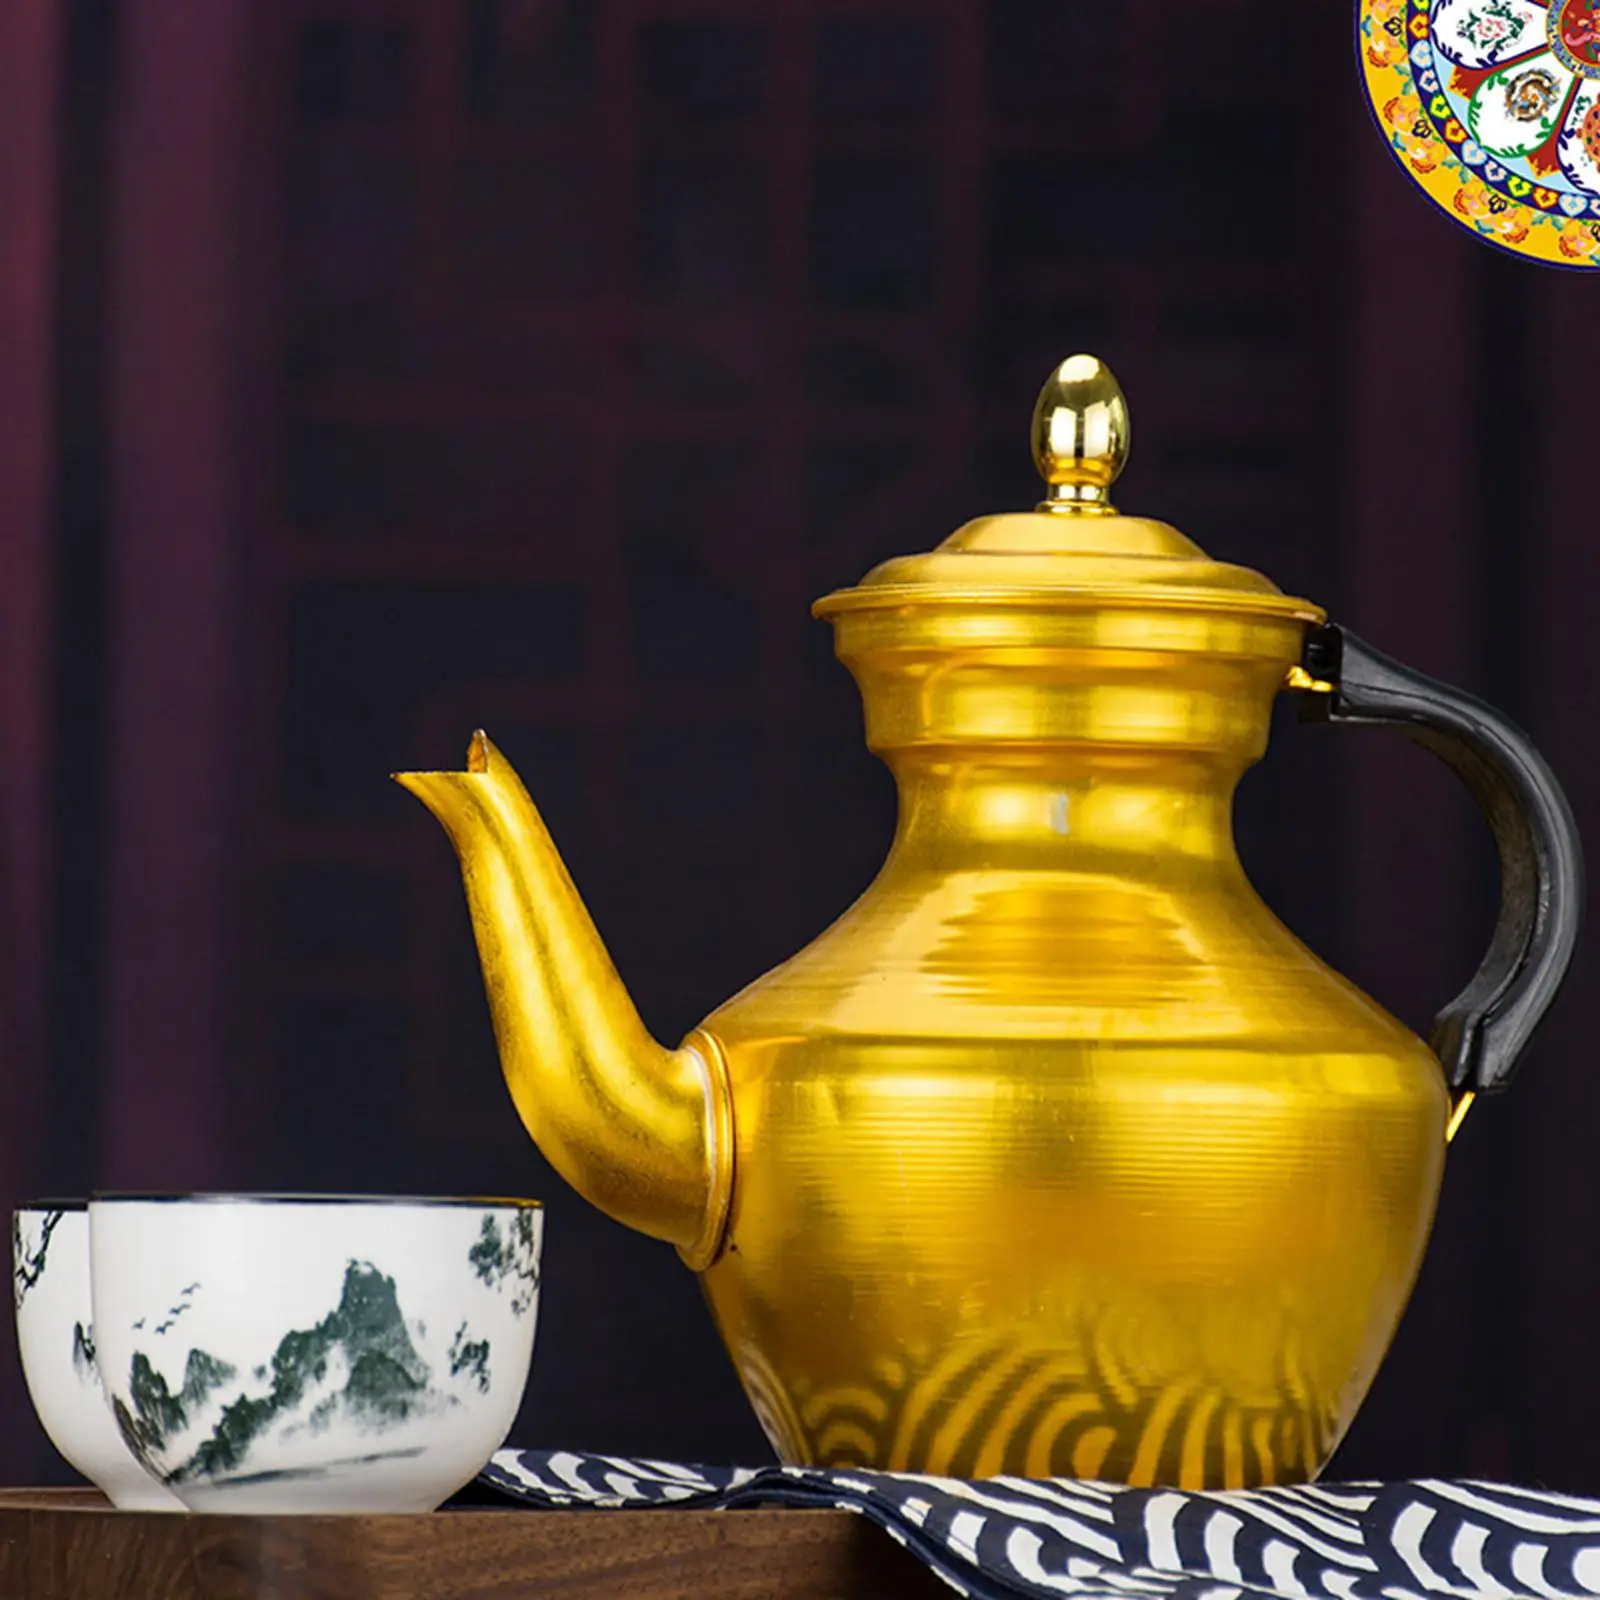 Multifunction Gooseneck Teapot High Capacity Tibetan Style Milk Tea Pot Ghee Teapot Tea Kettle for Kitchen Restaurant Home